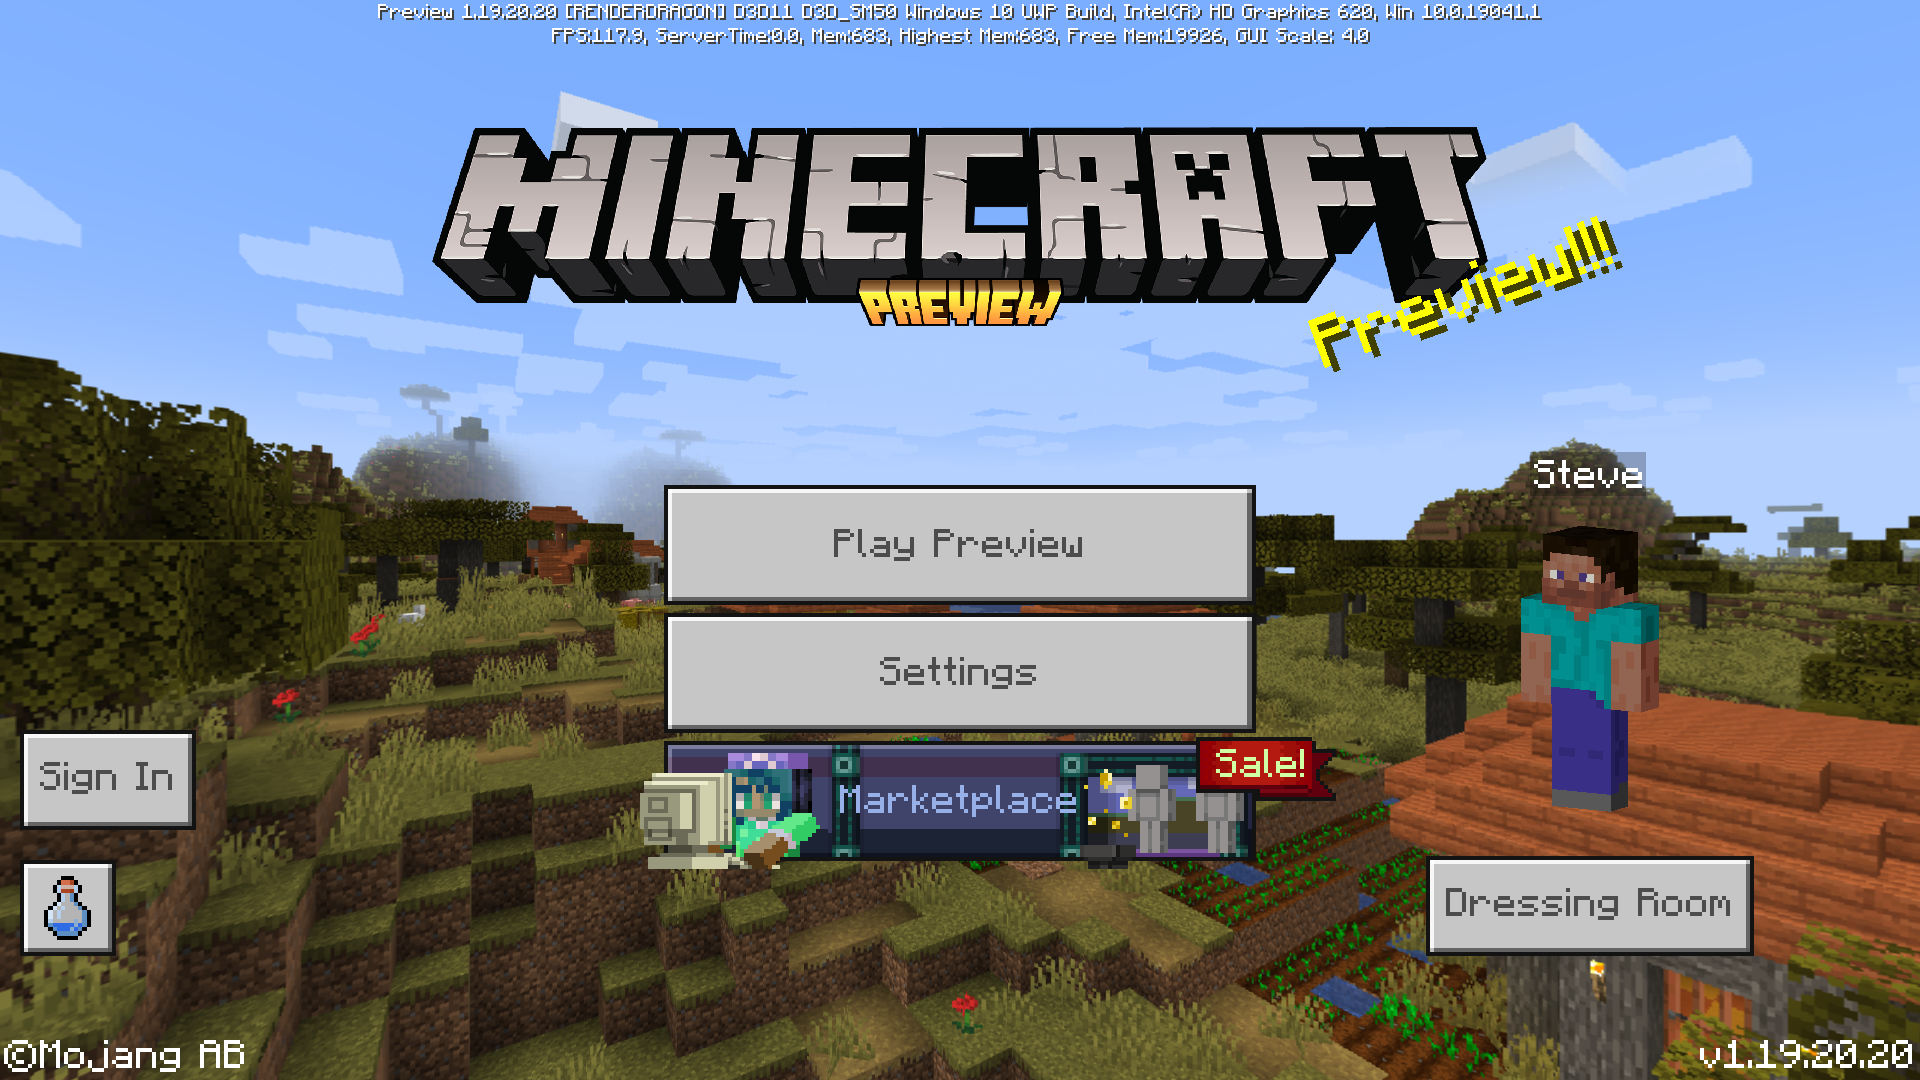 Download Minecraft 1.17.20.20 Free - Bedrock Edition 1.17.20.20 APK